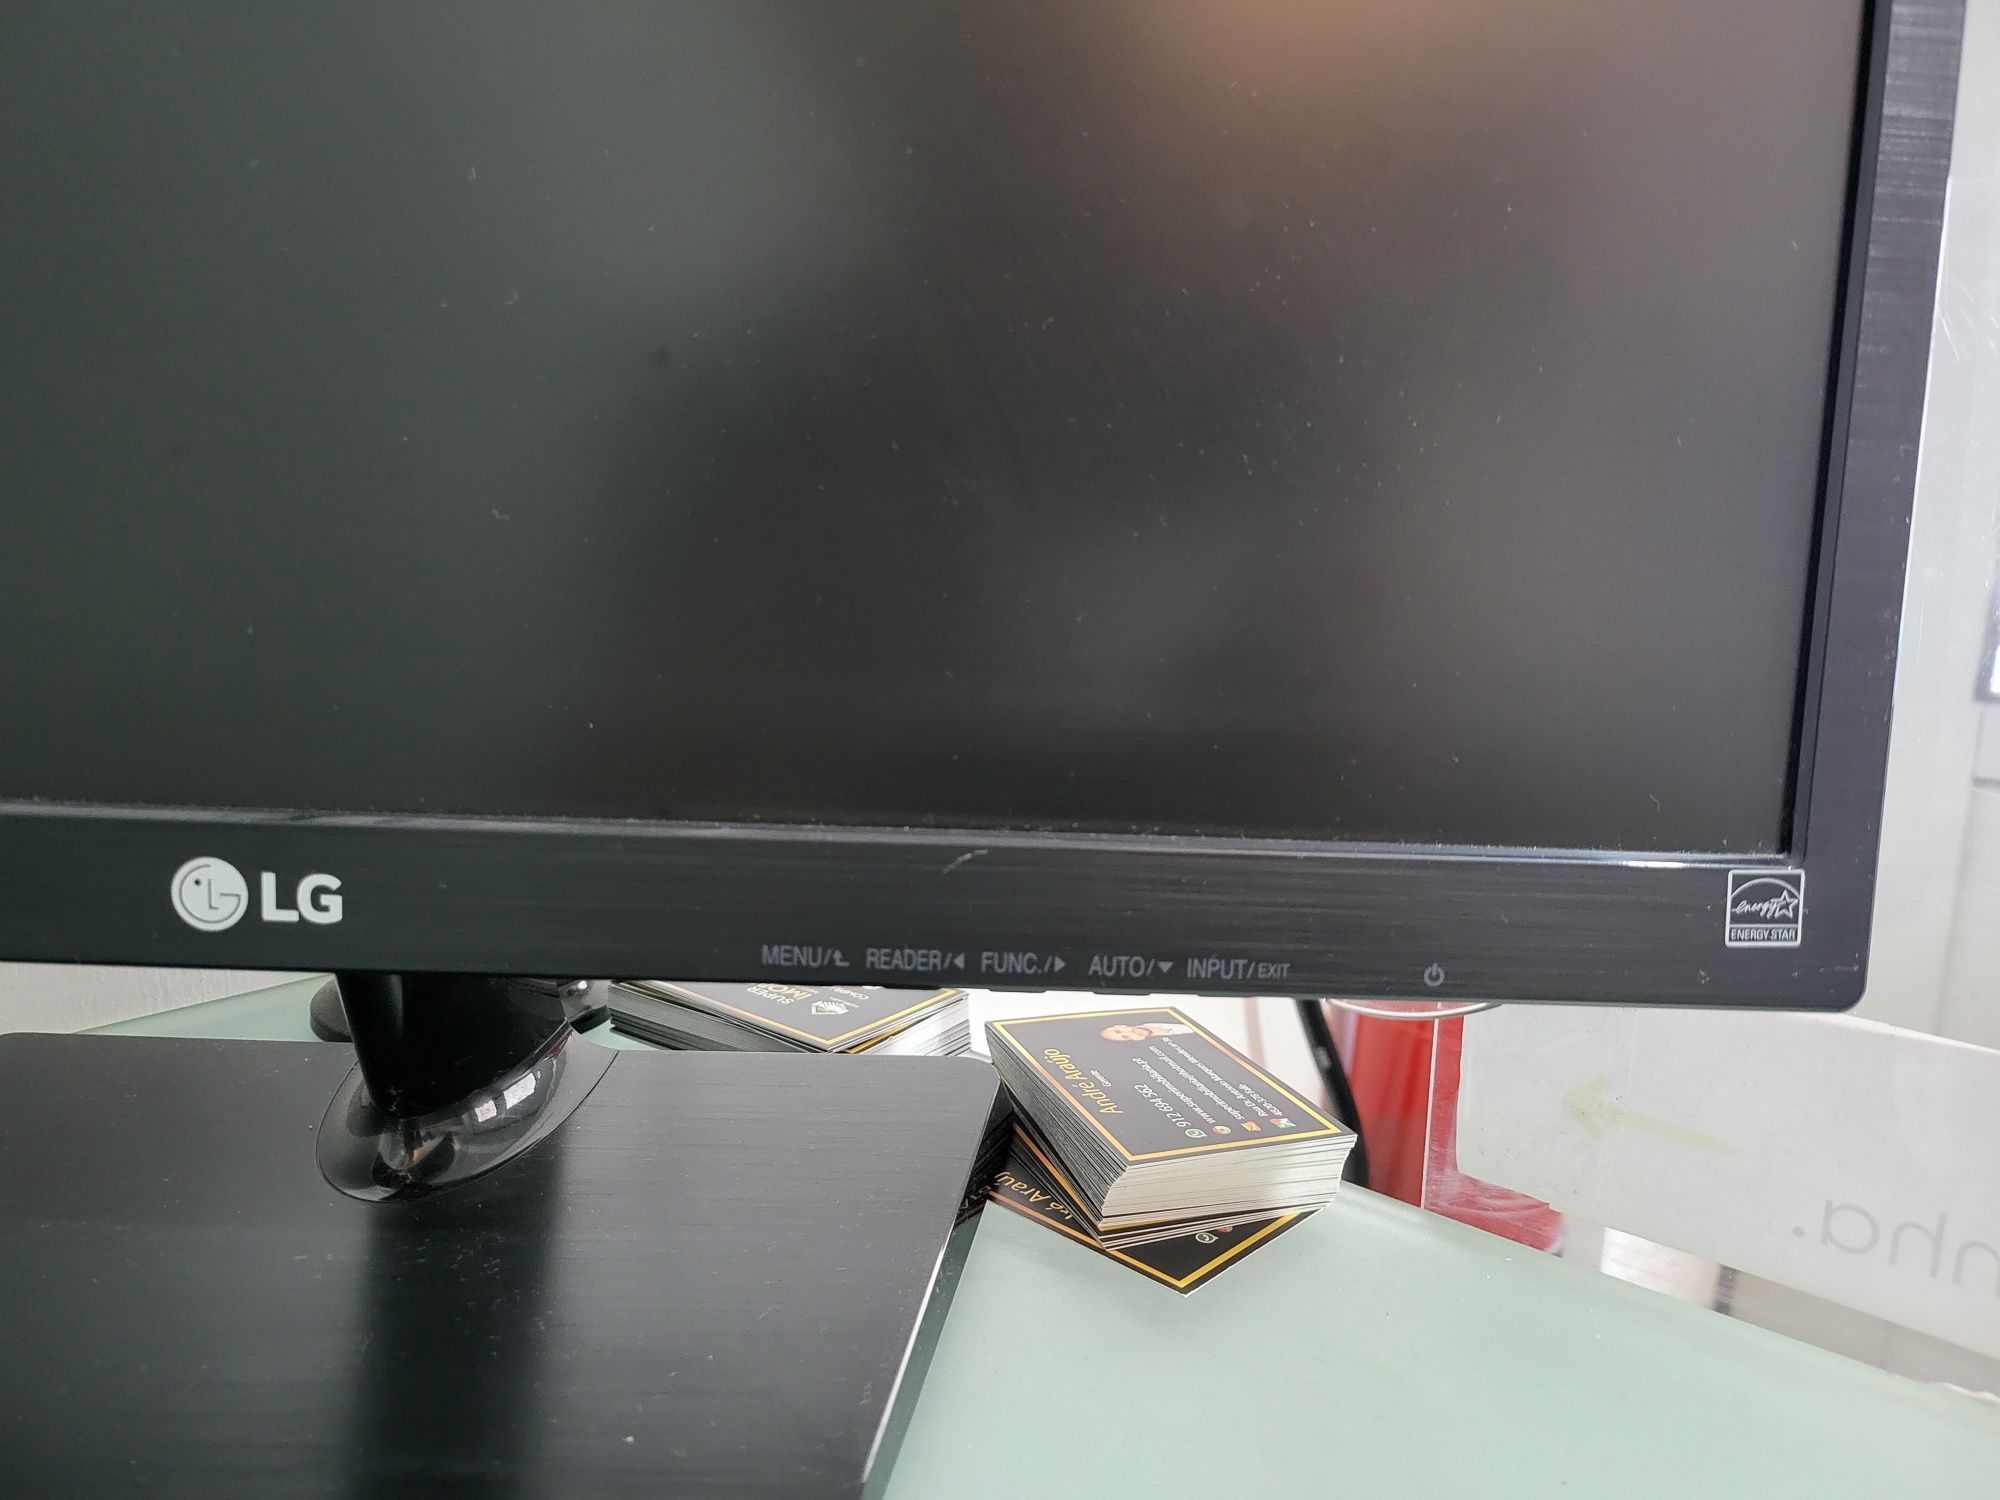 Monitor 22 LG ecrã full hd + VGA + adaptador para HDMI